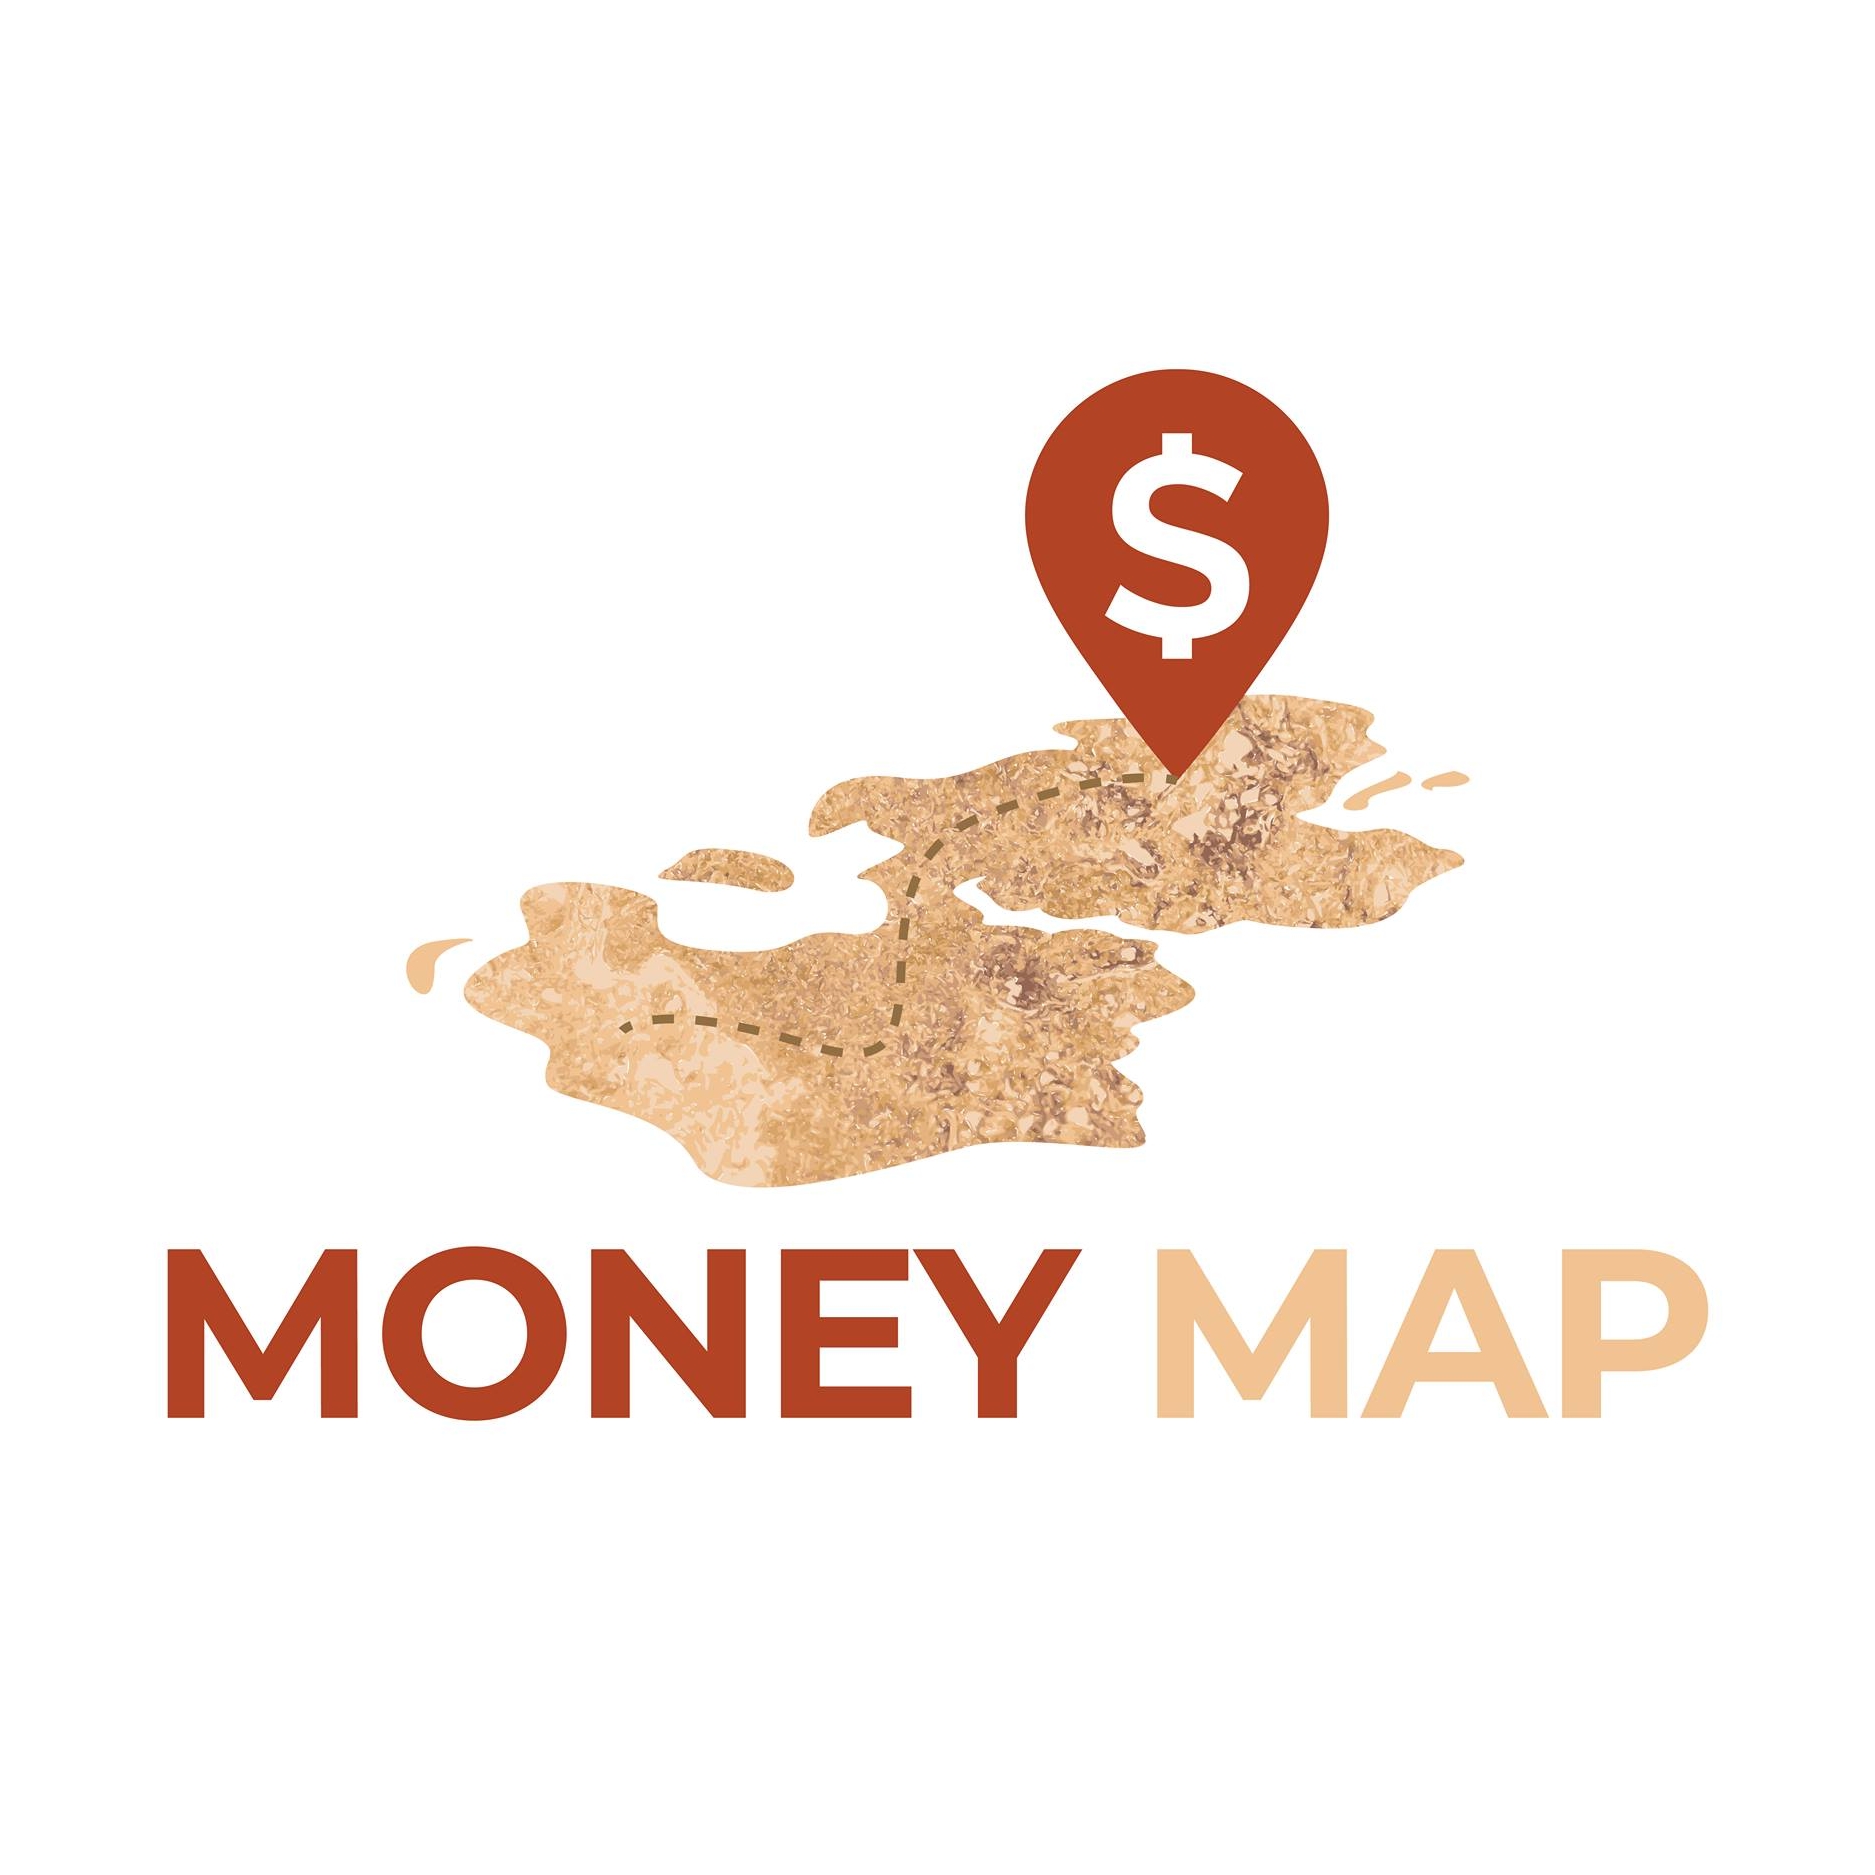 Moneymap 0 